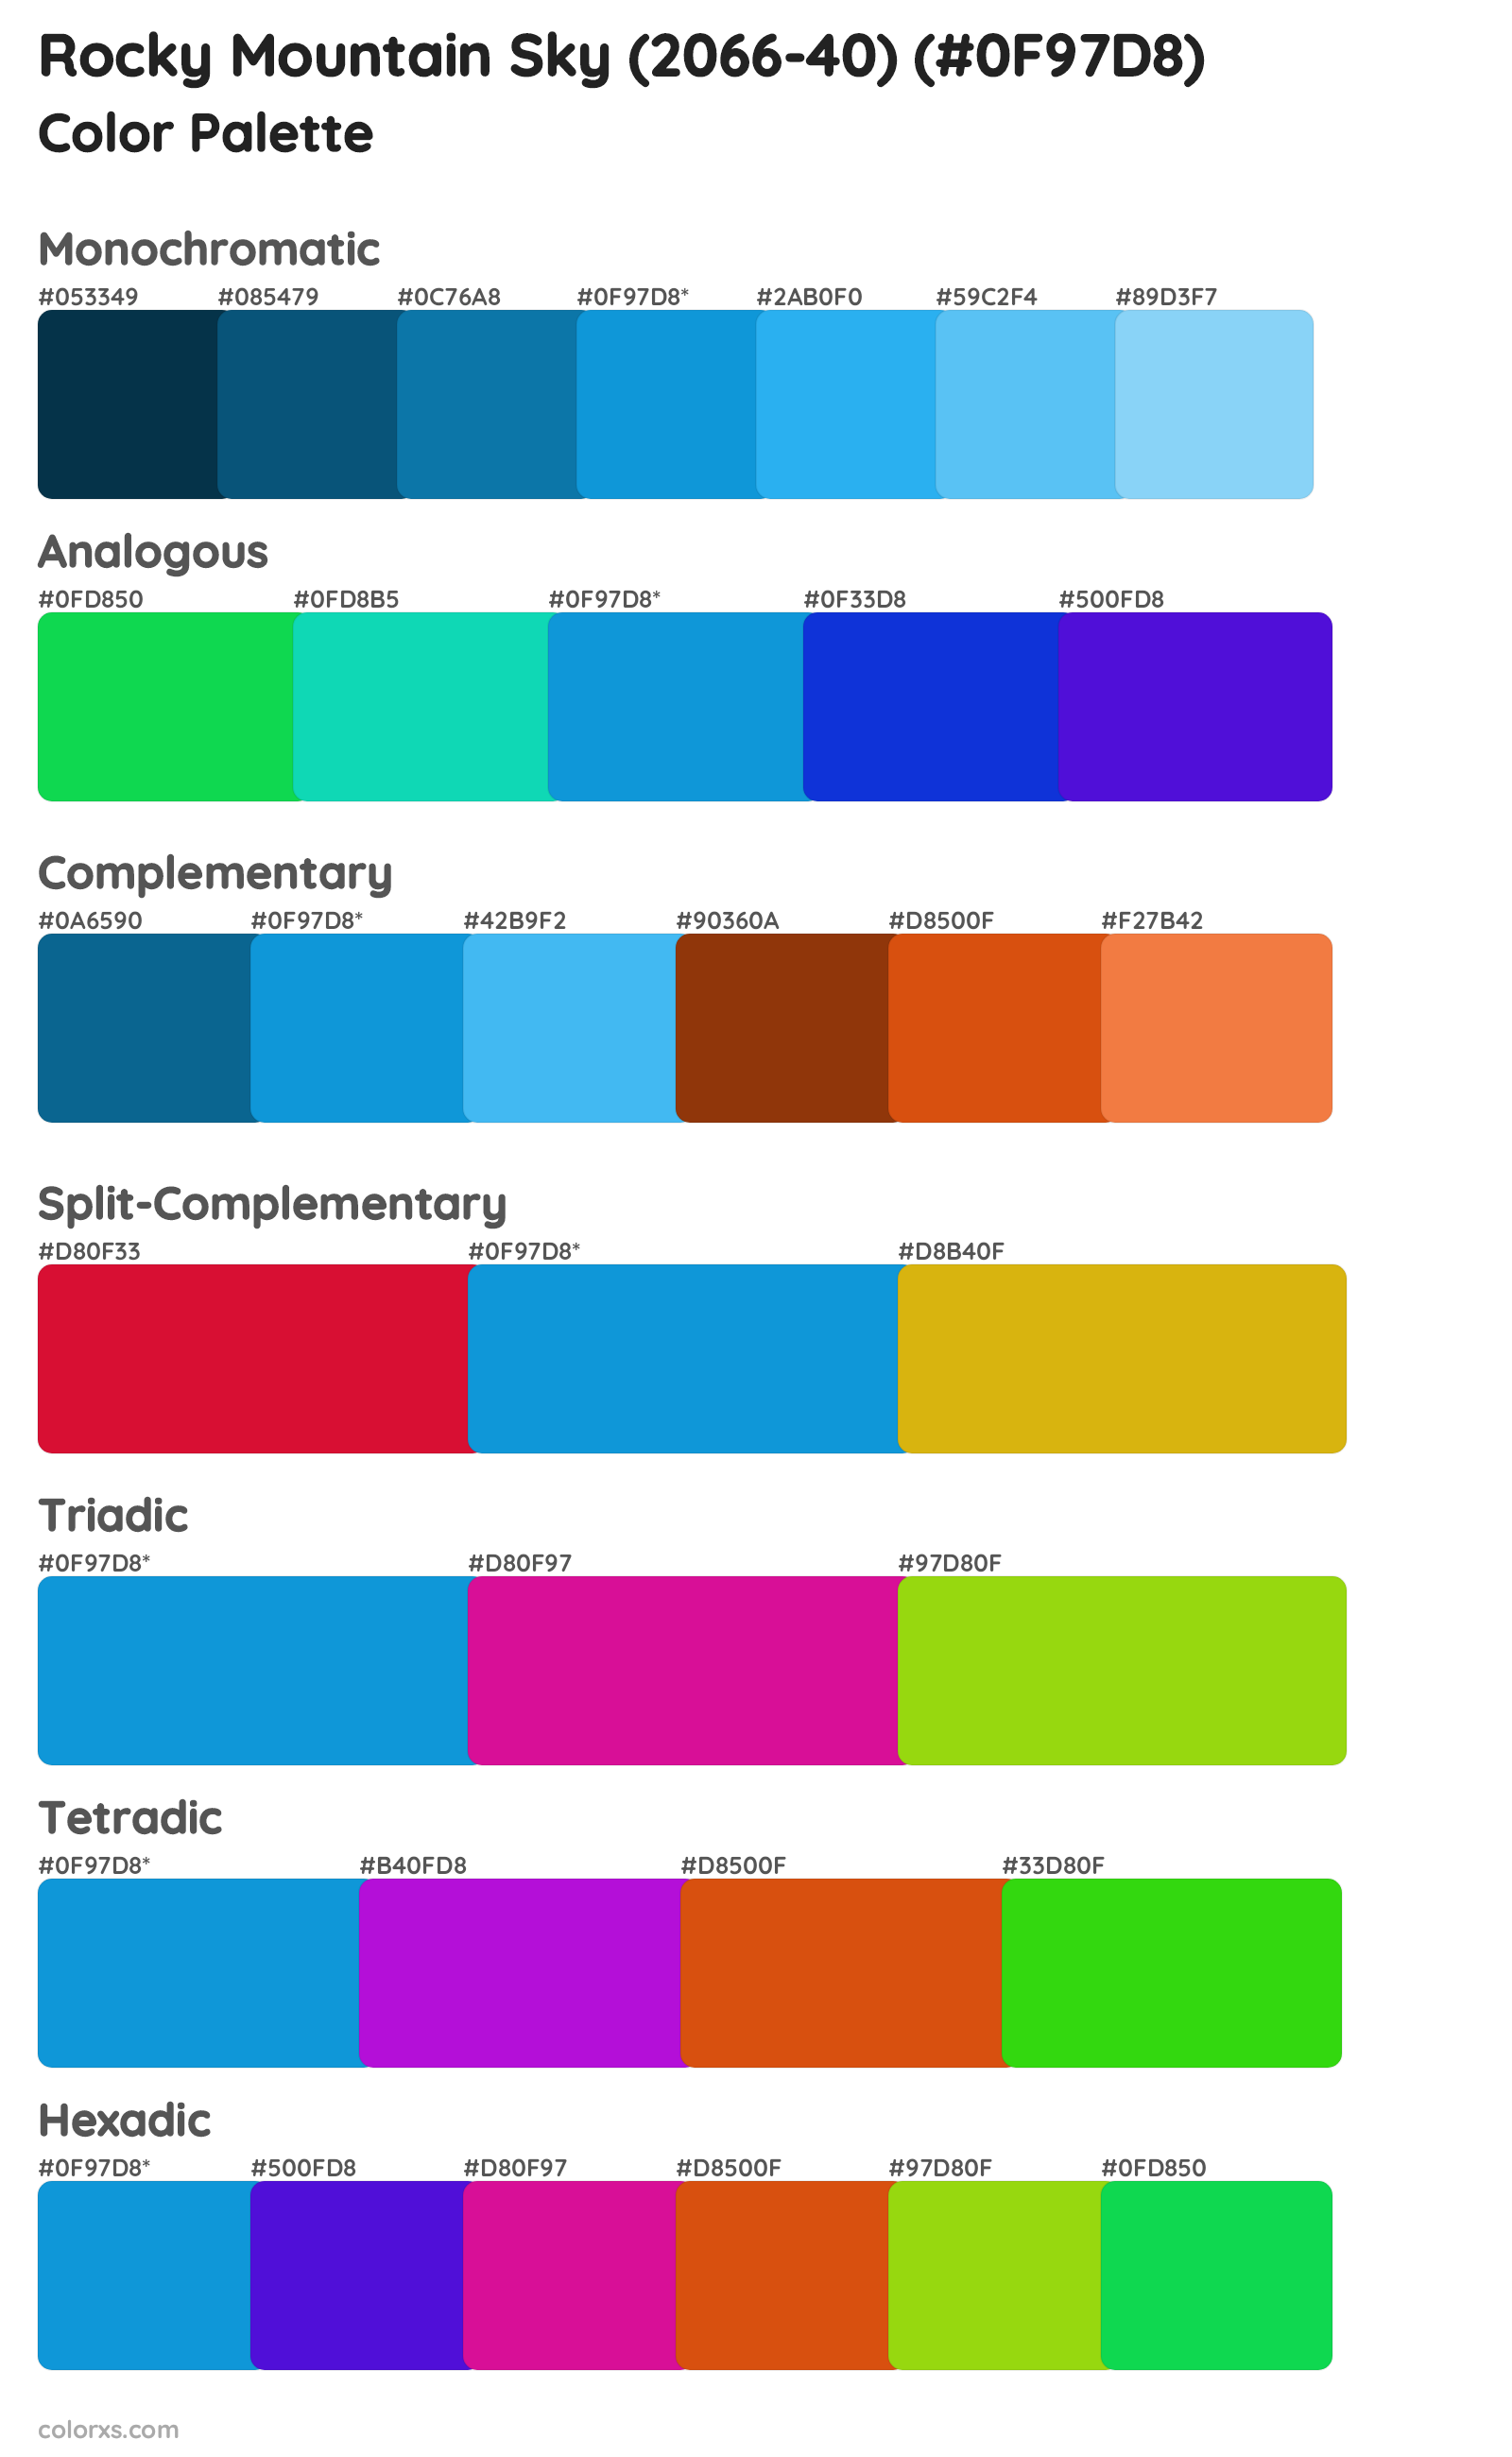 Rocky Mountain Sky (2066-40) Color Scheme Palettes